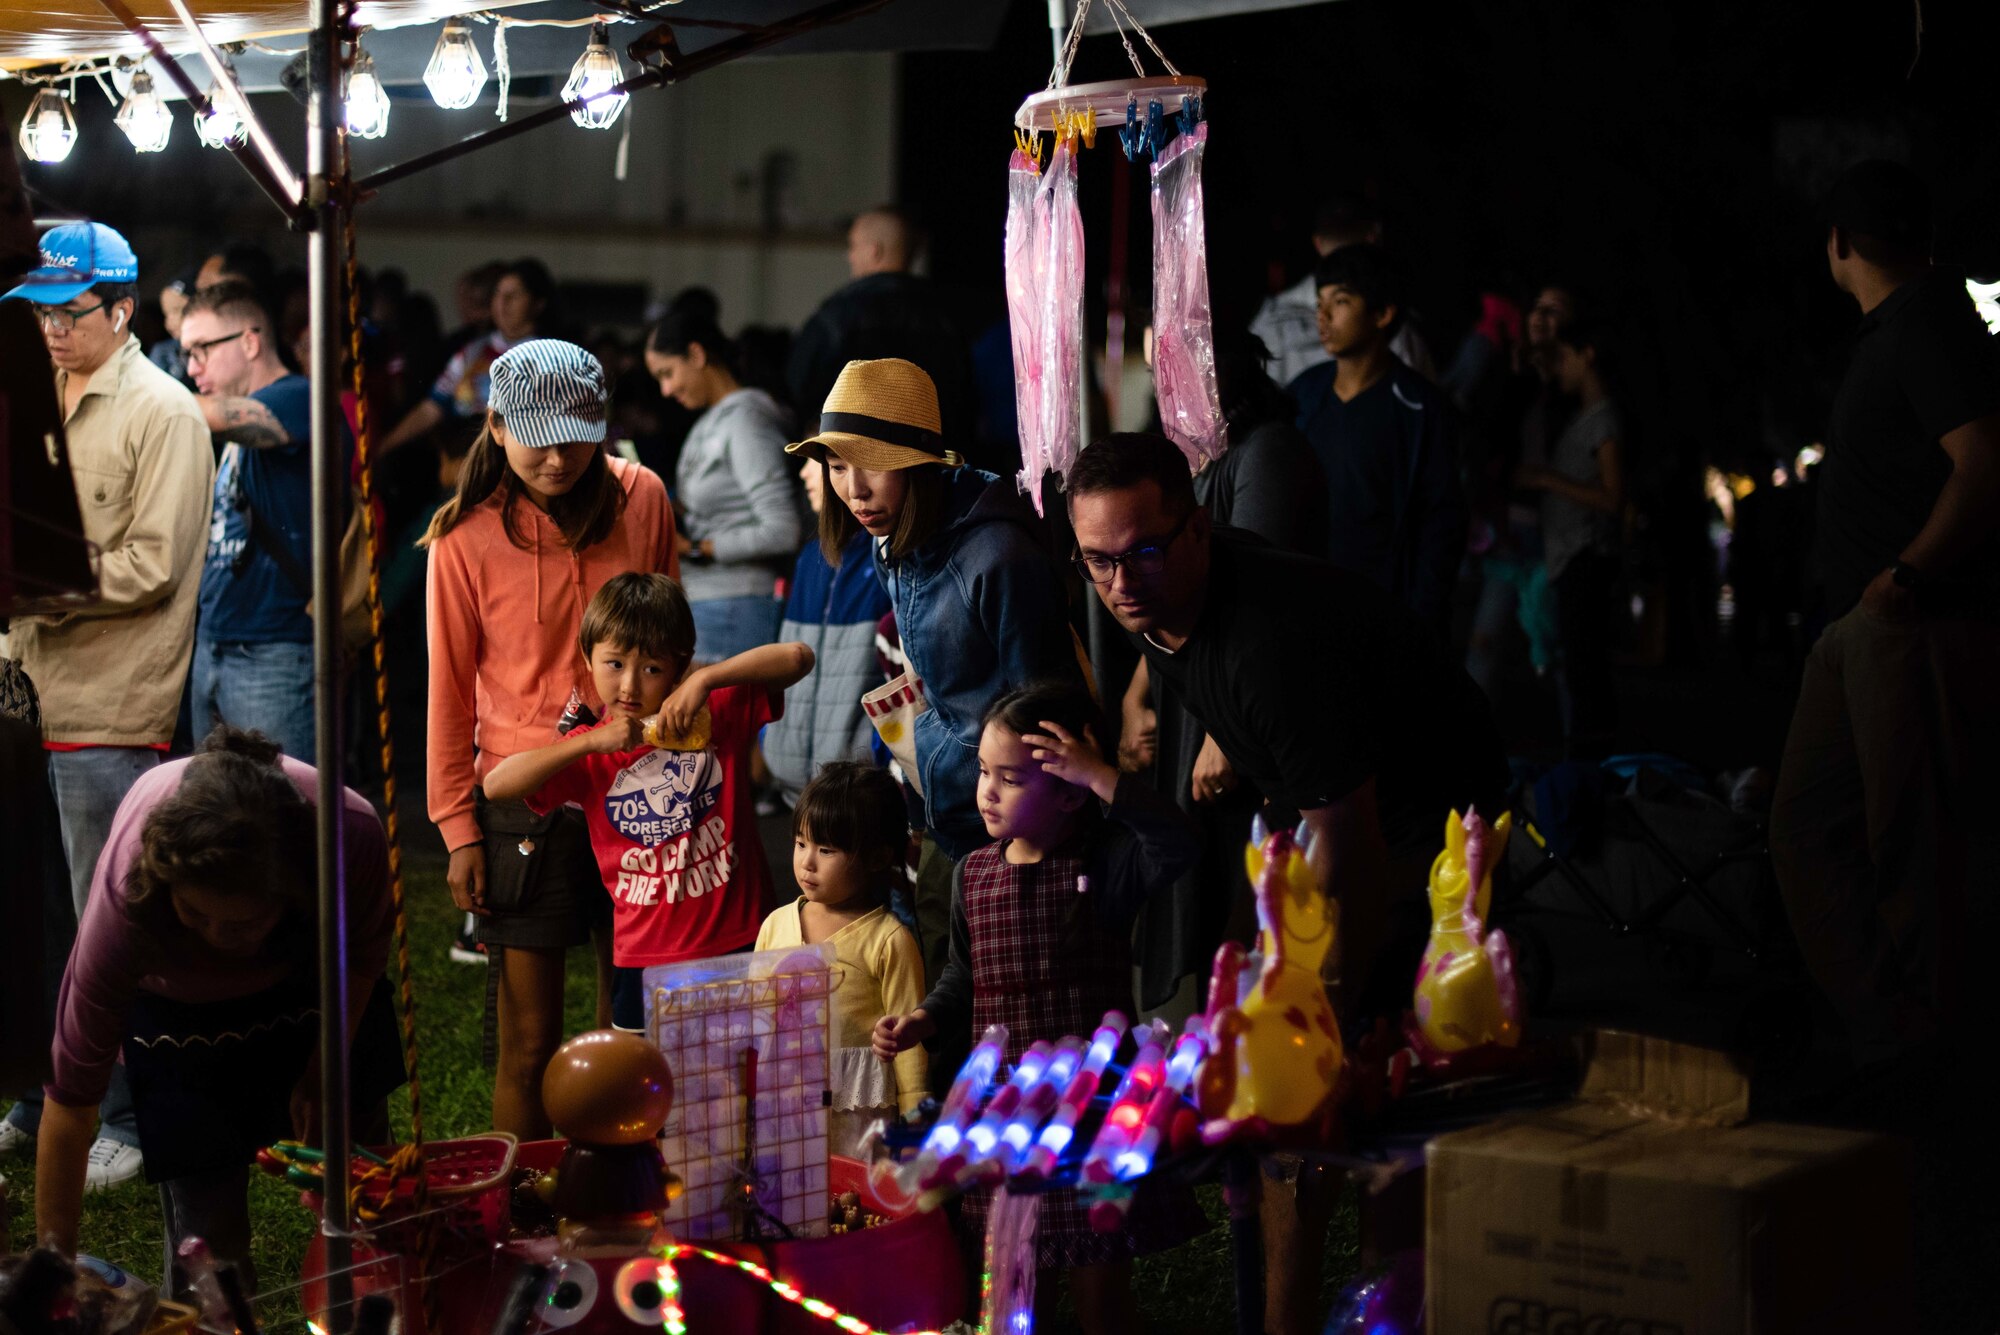 Okinawan families celebrate holiday season with Team Kadena during Tinsel Town